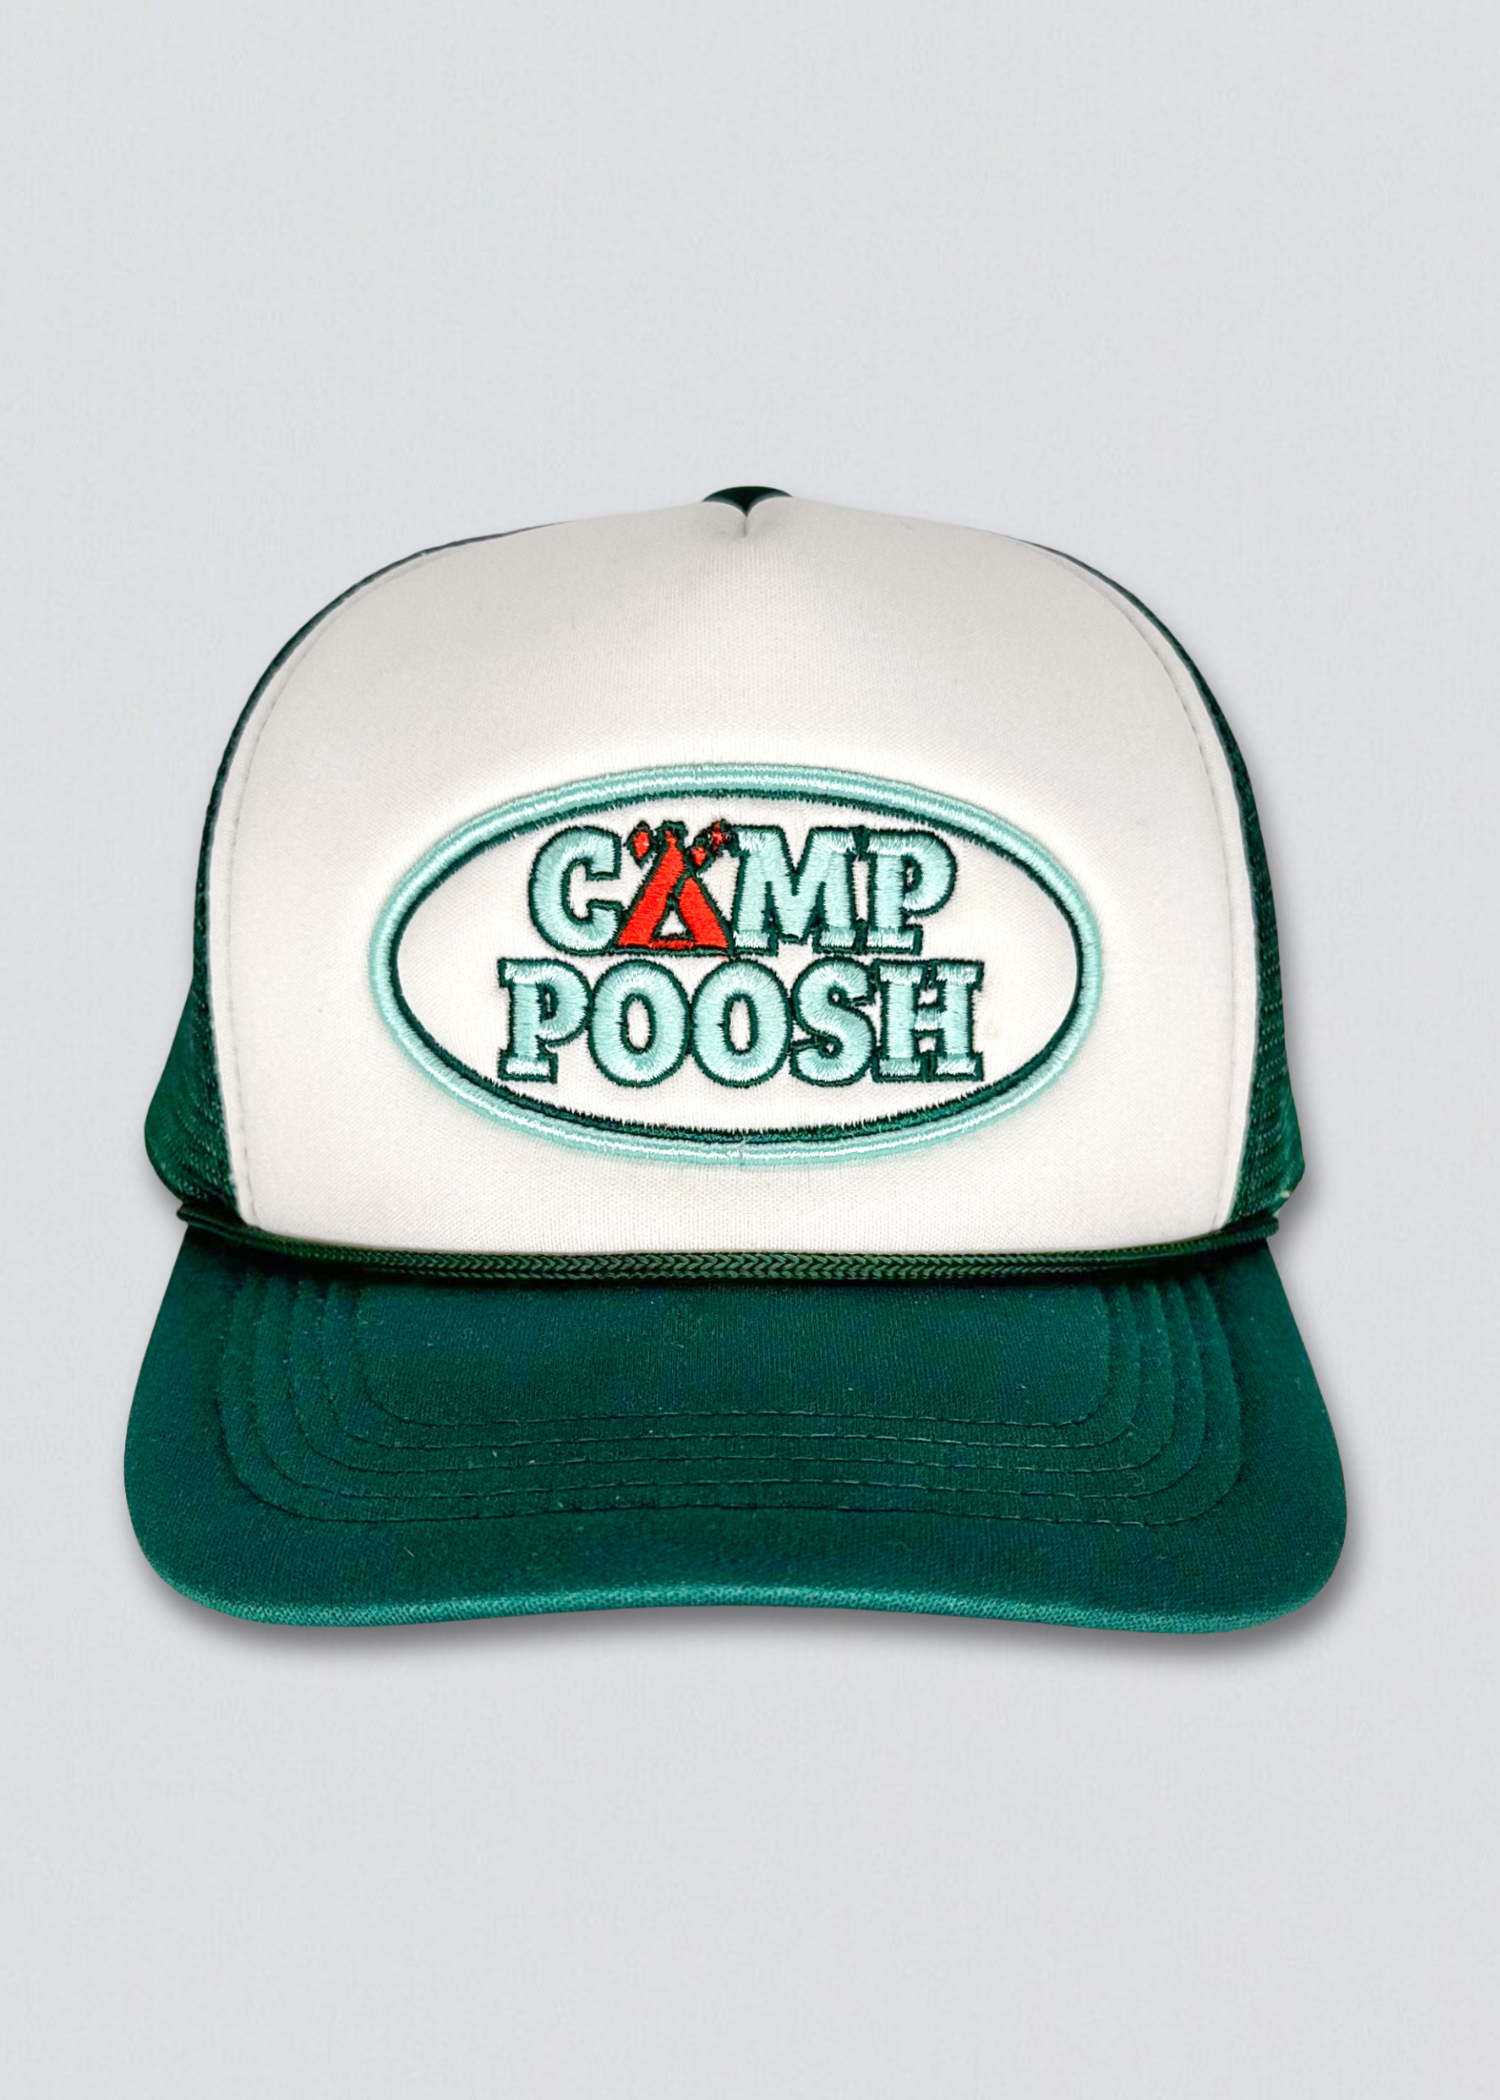 Camp Poosh x Coney Island Picnic Trucker Hat